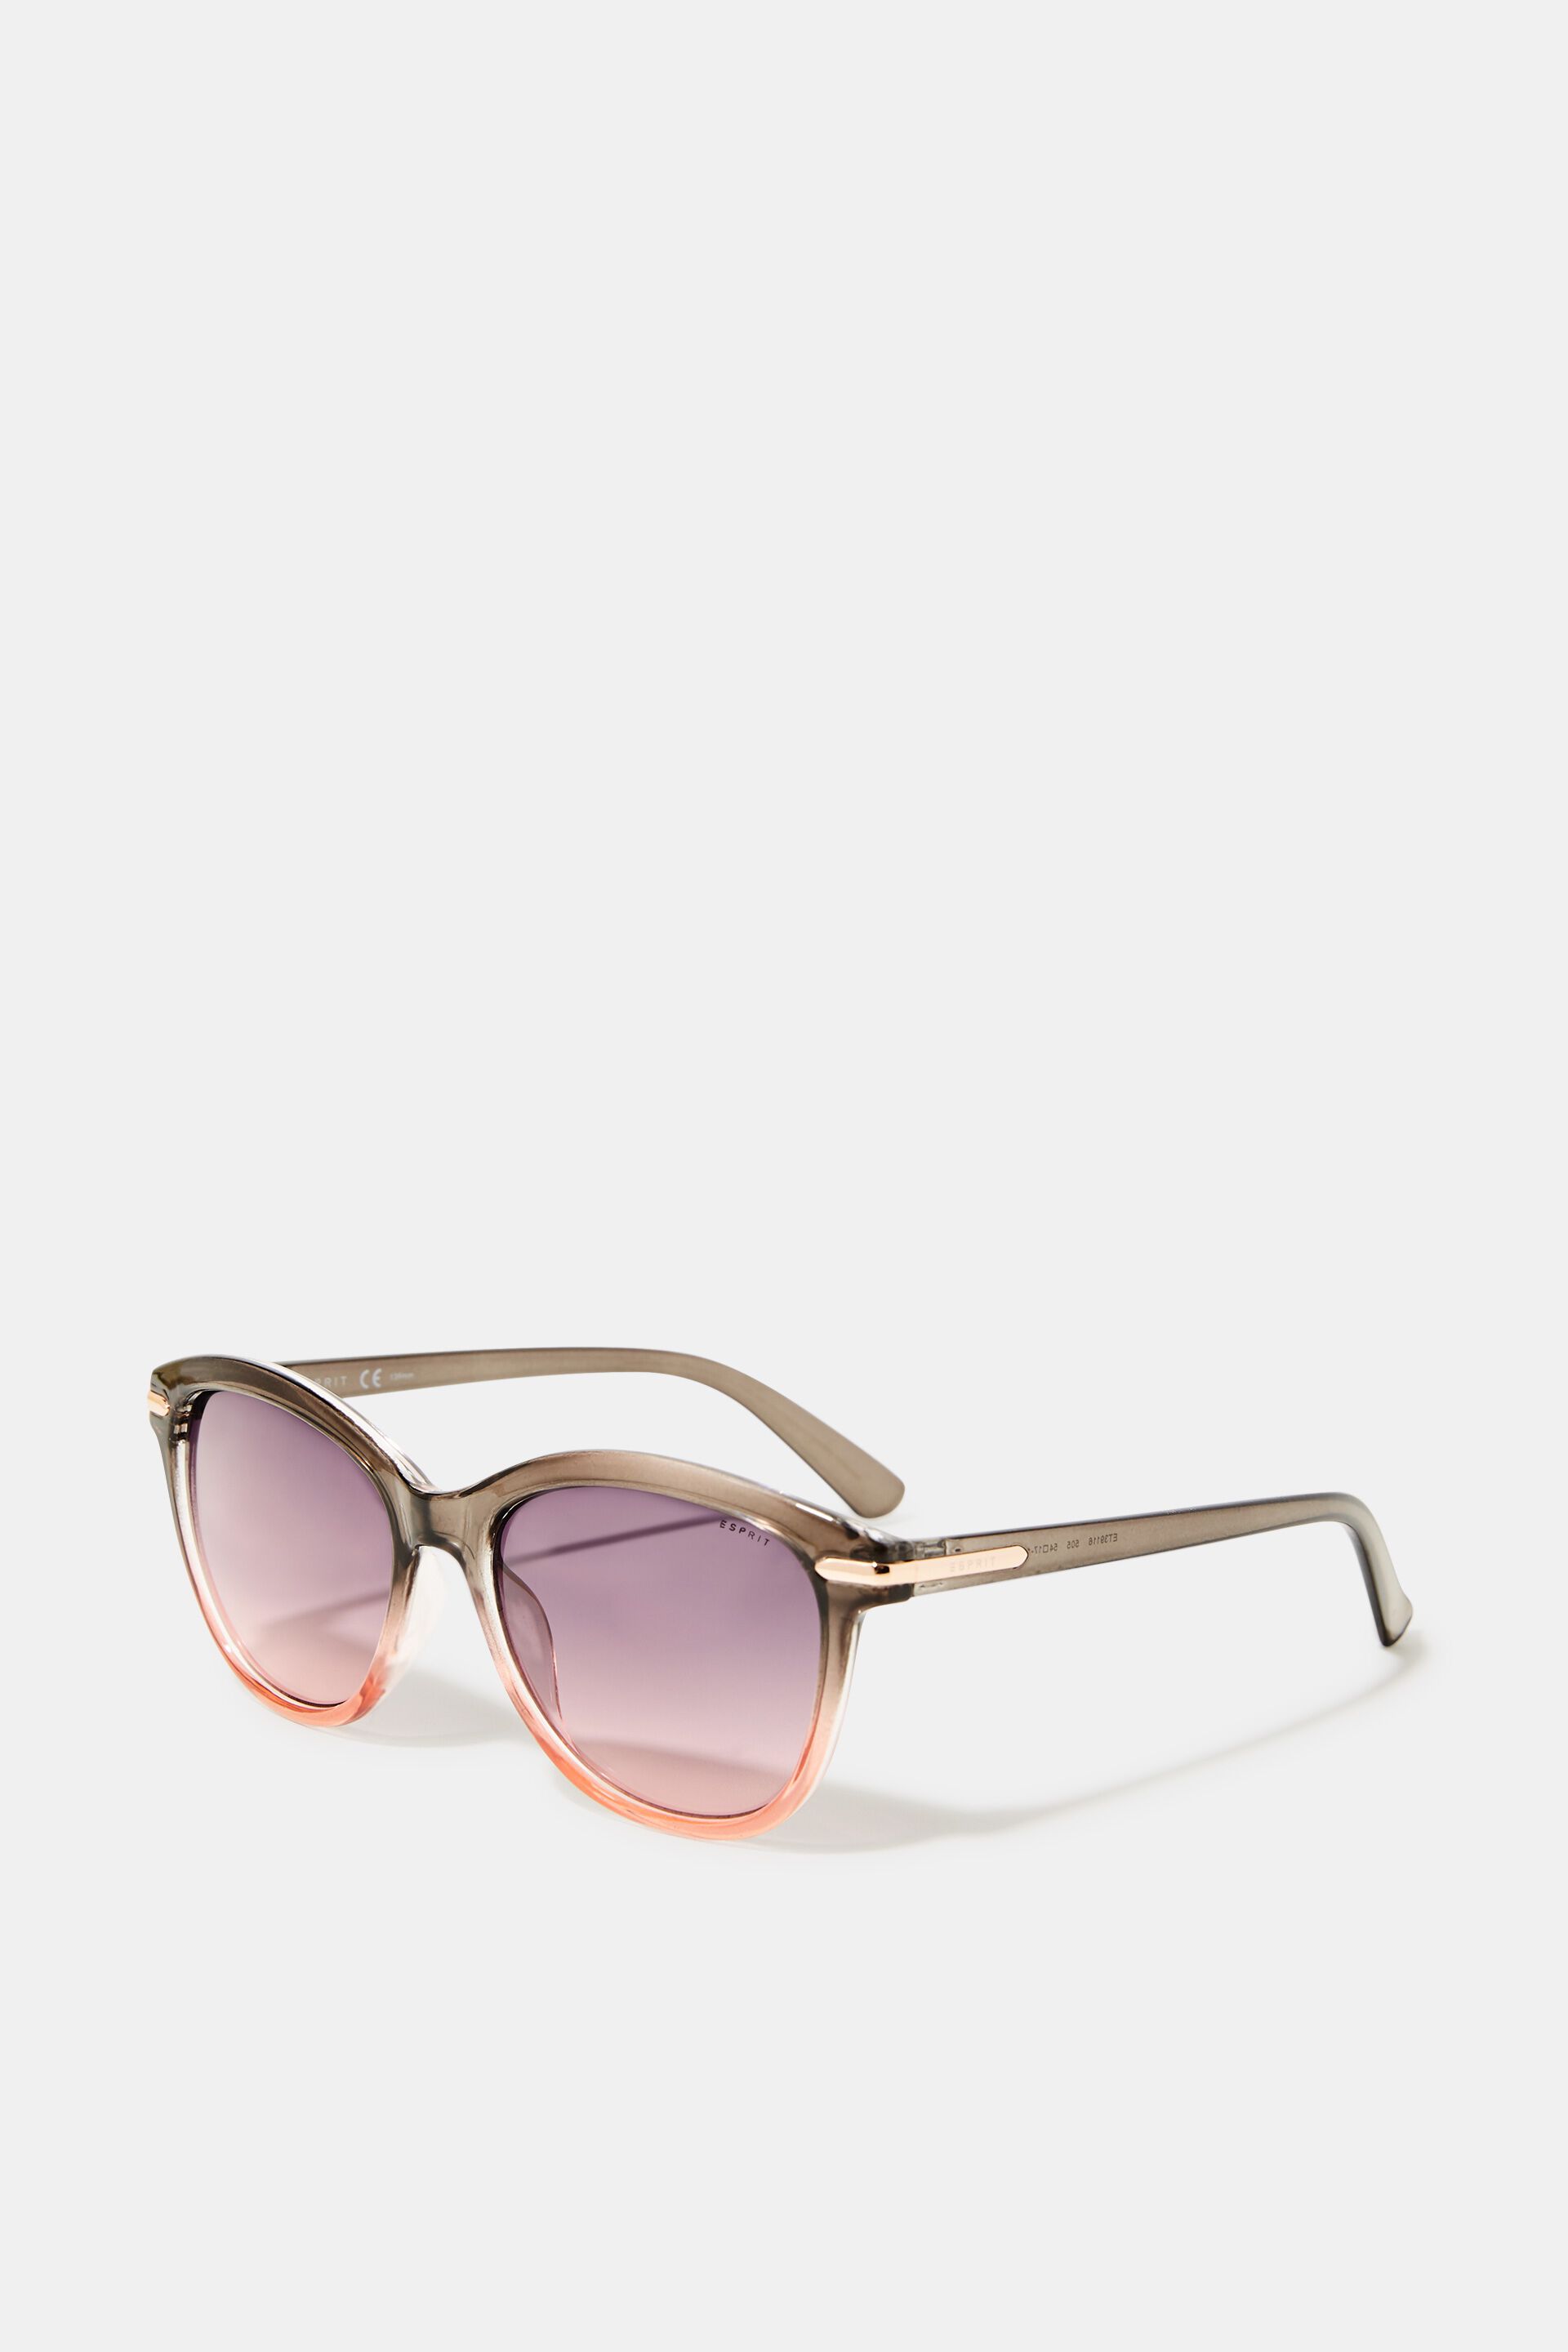 Esprit Online Store Graduated colour sunglasses